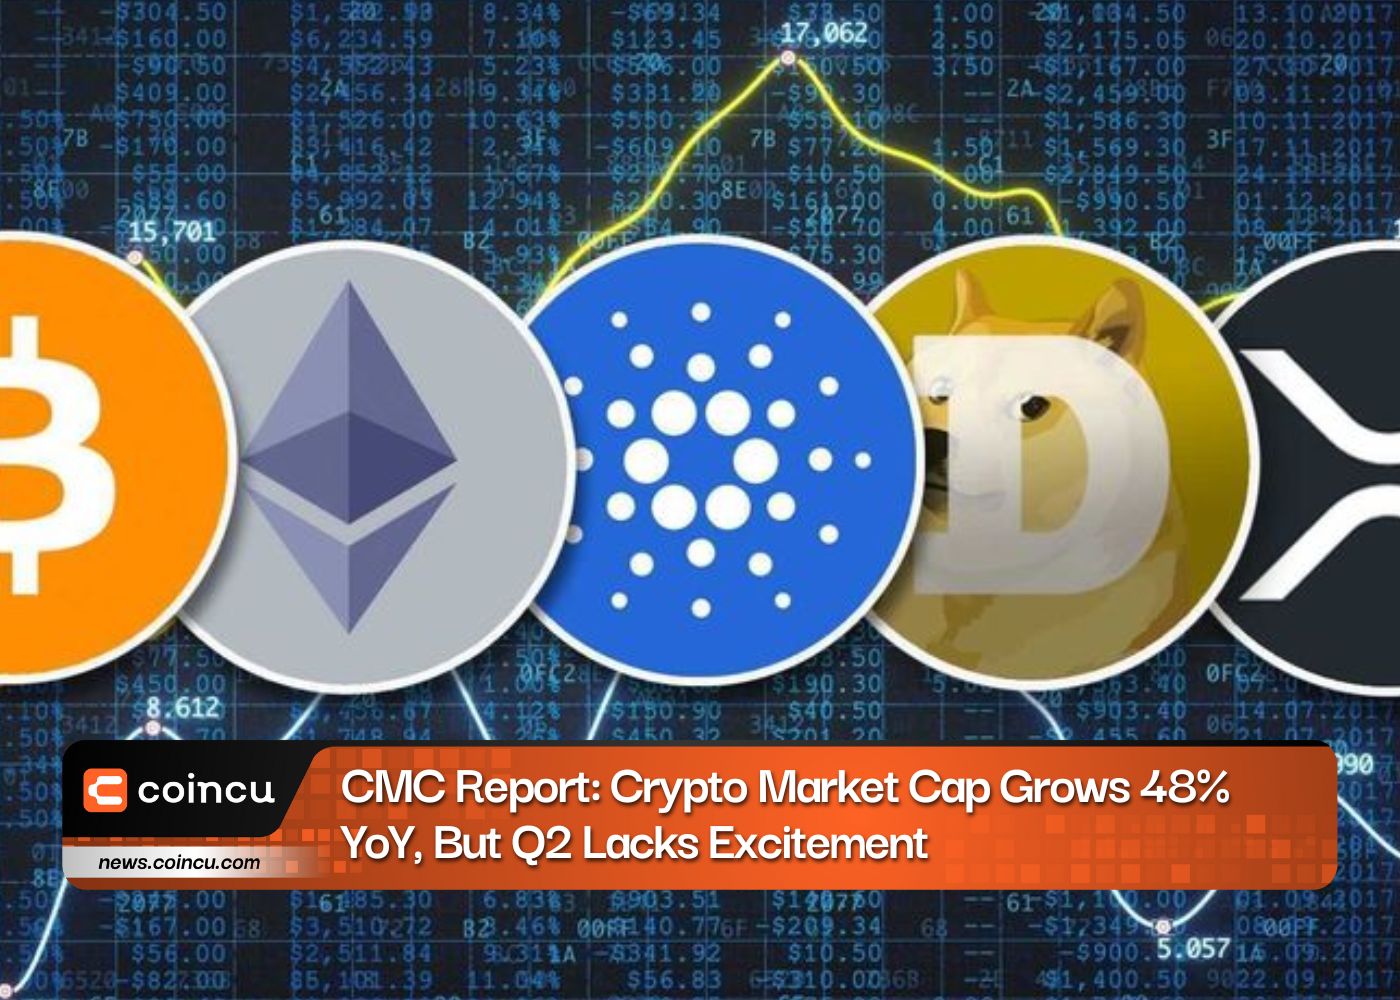 CMC Report: Crypto Market Cap Grows 48% YoY, But Q2 Lacks Excitement